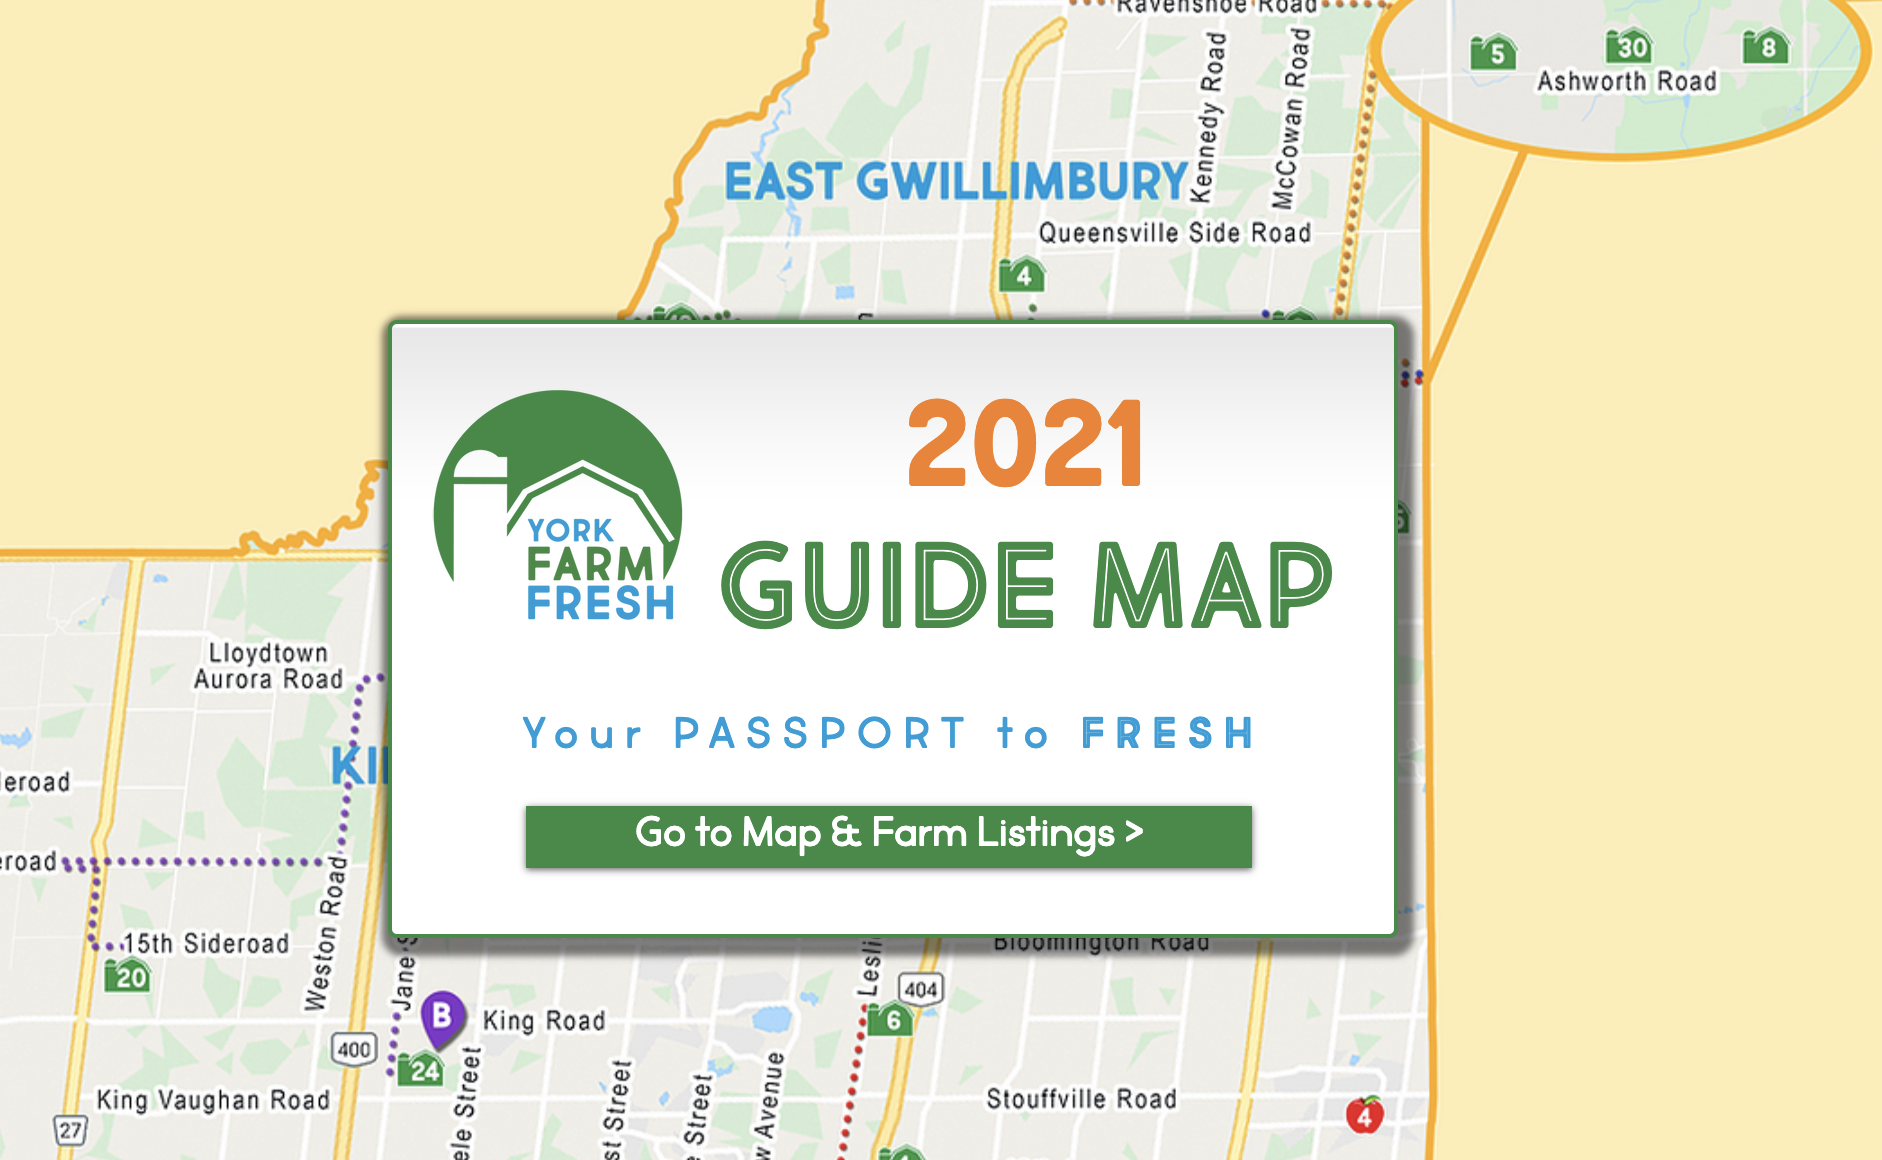 York Farm Fresh Guide Map